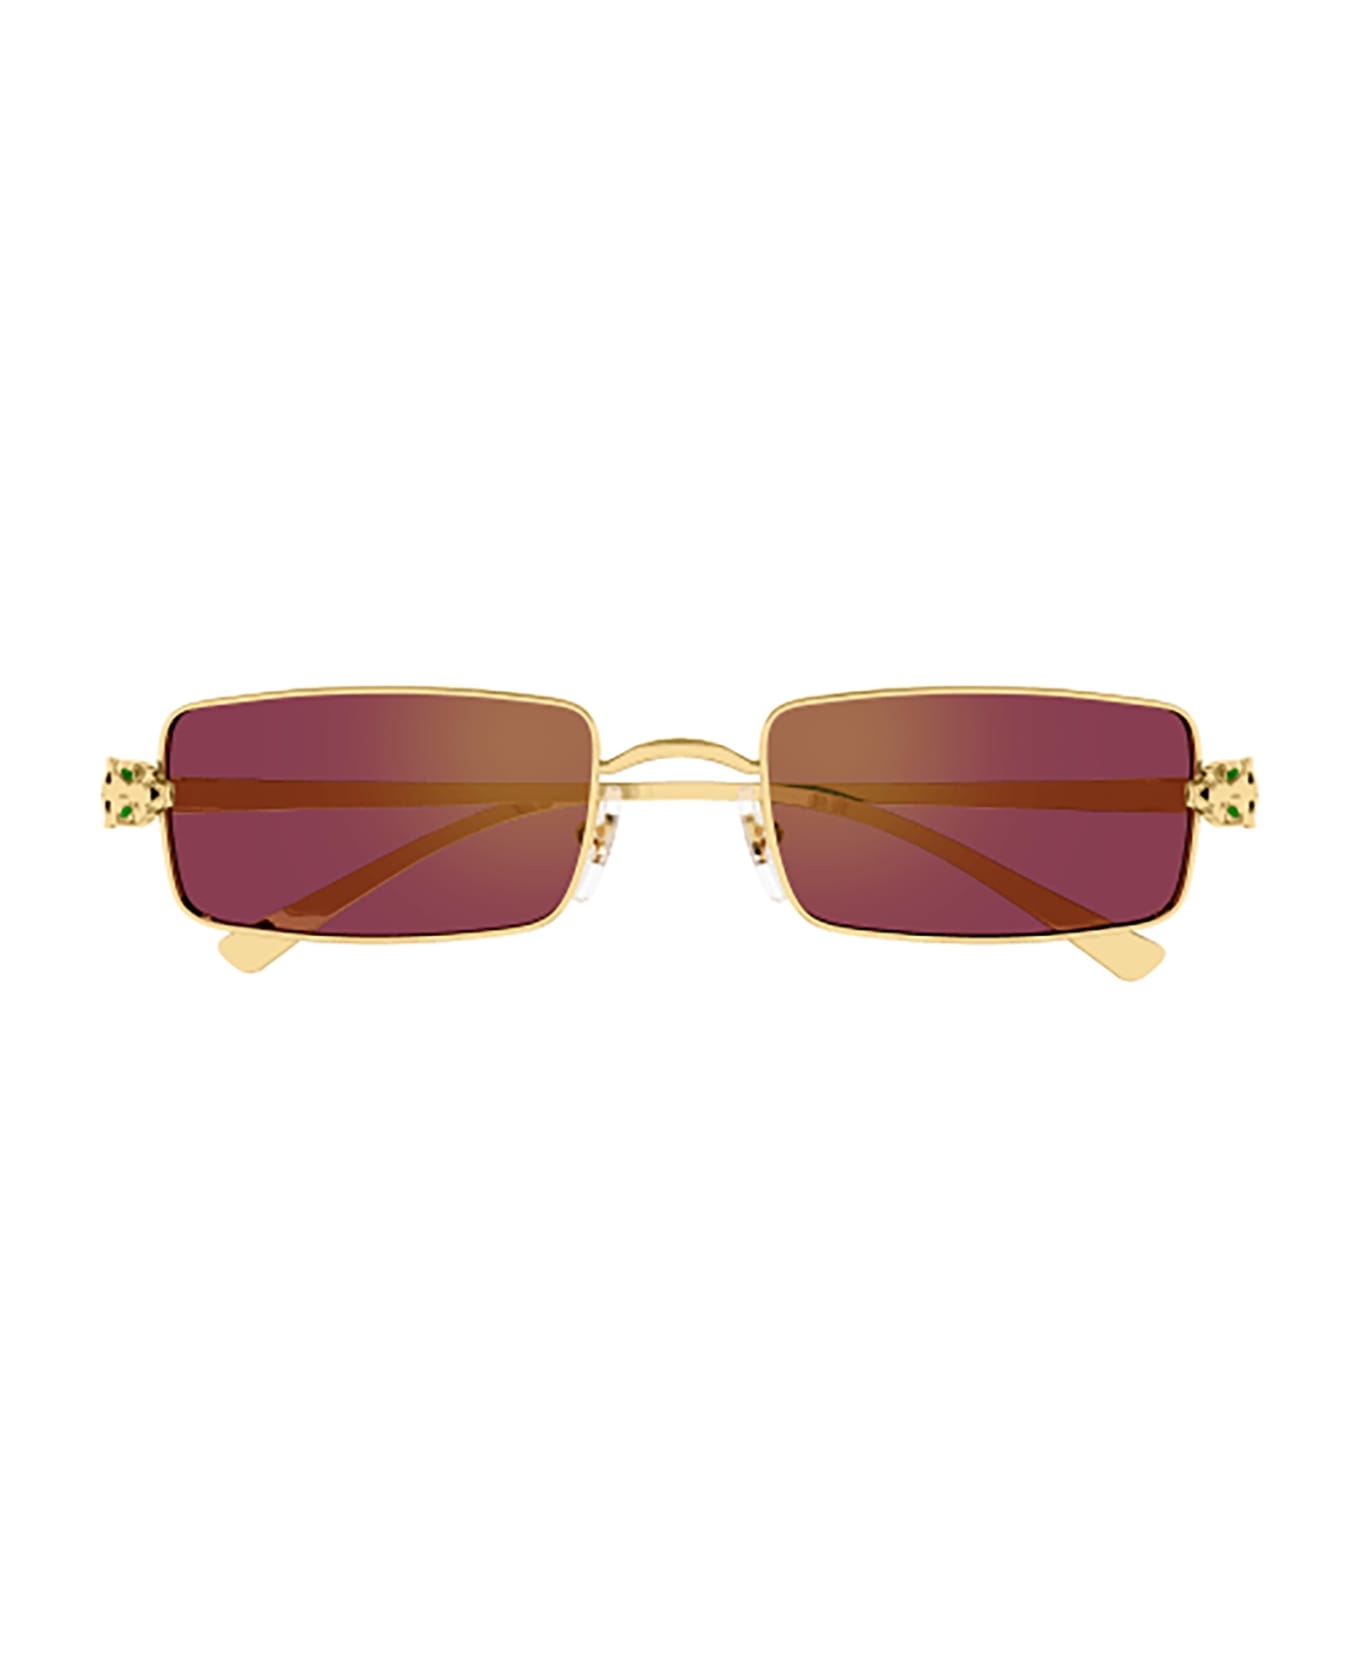 Cartier Eyewear Ct0473s Sunglasses - 002 GOLD GOLD RED サングラス